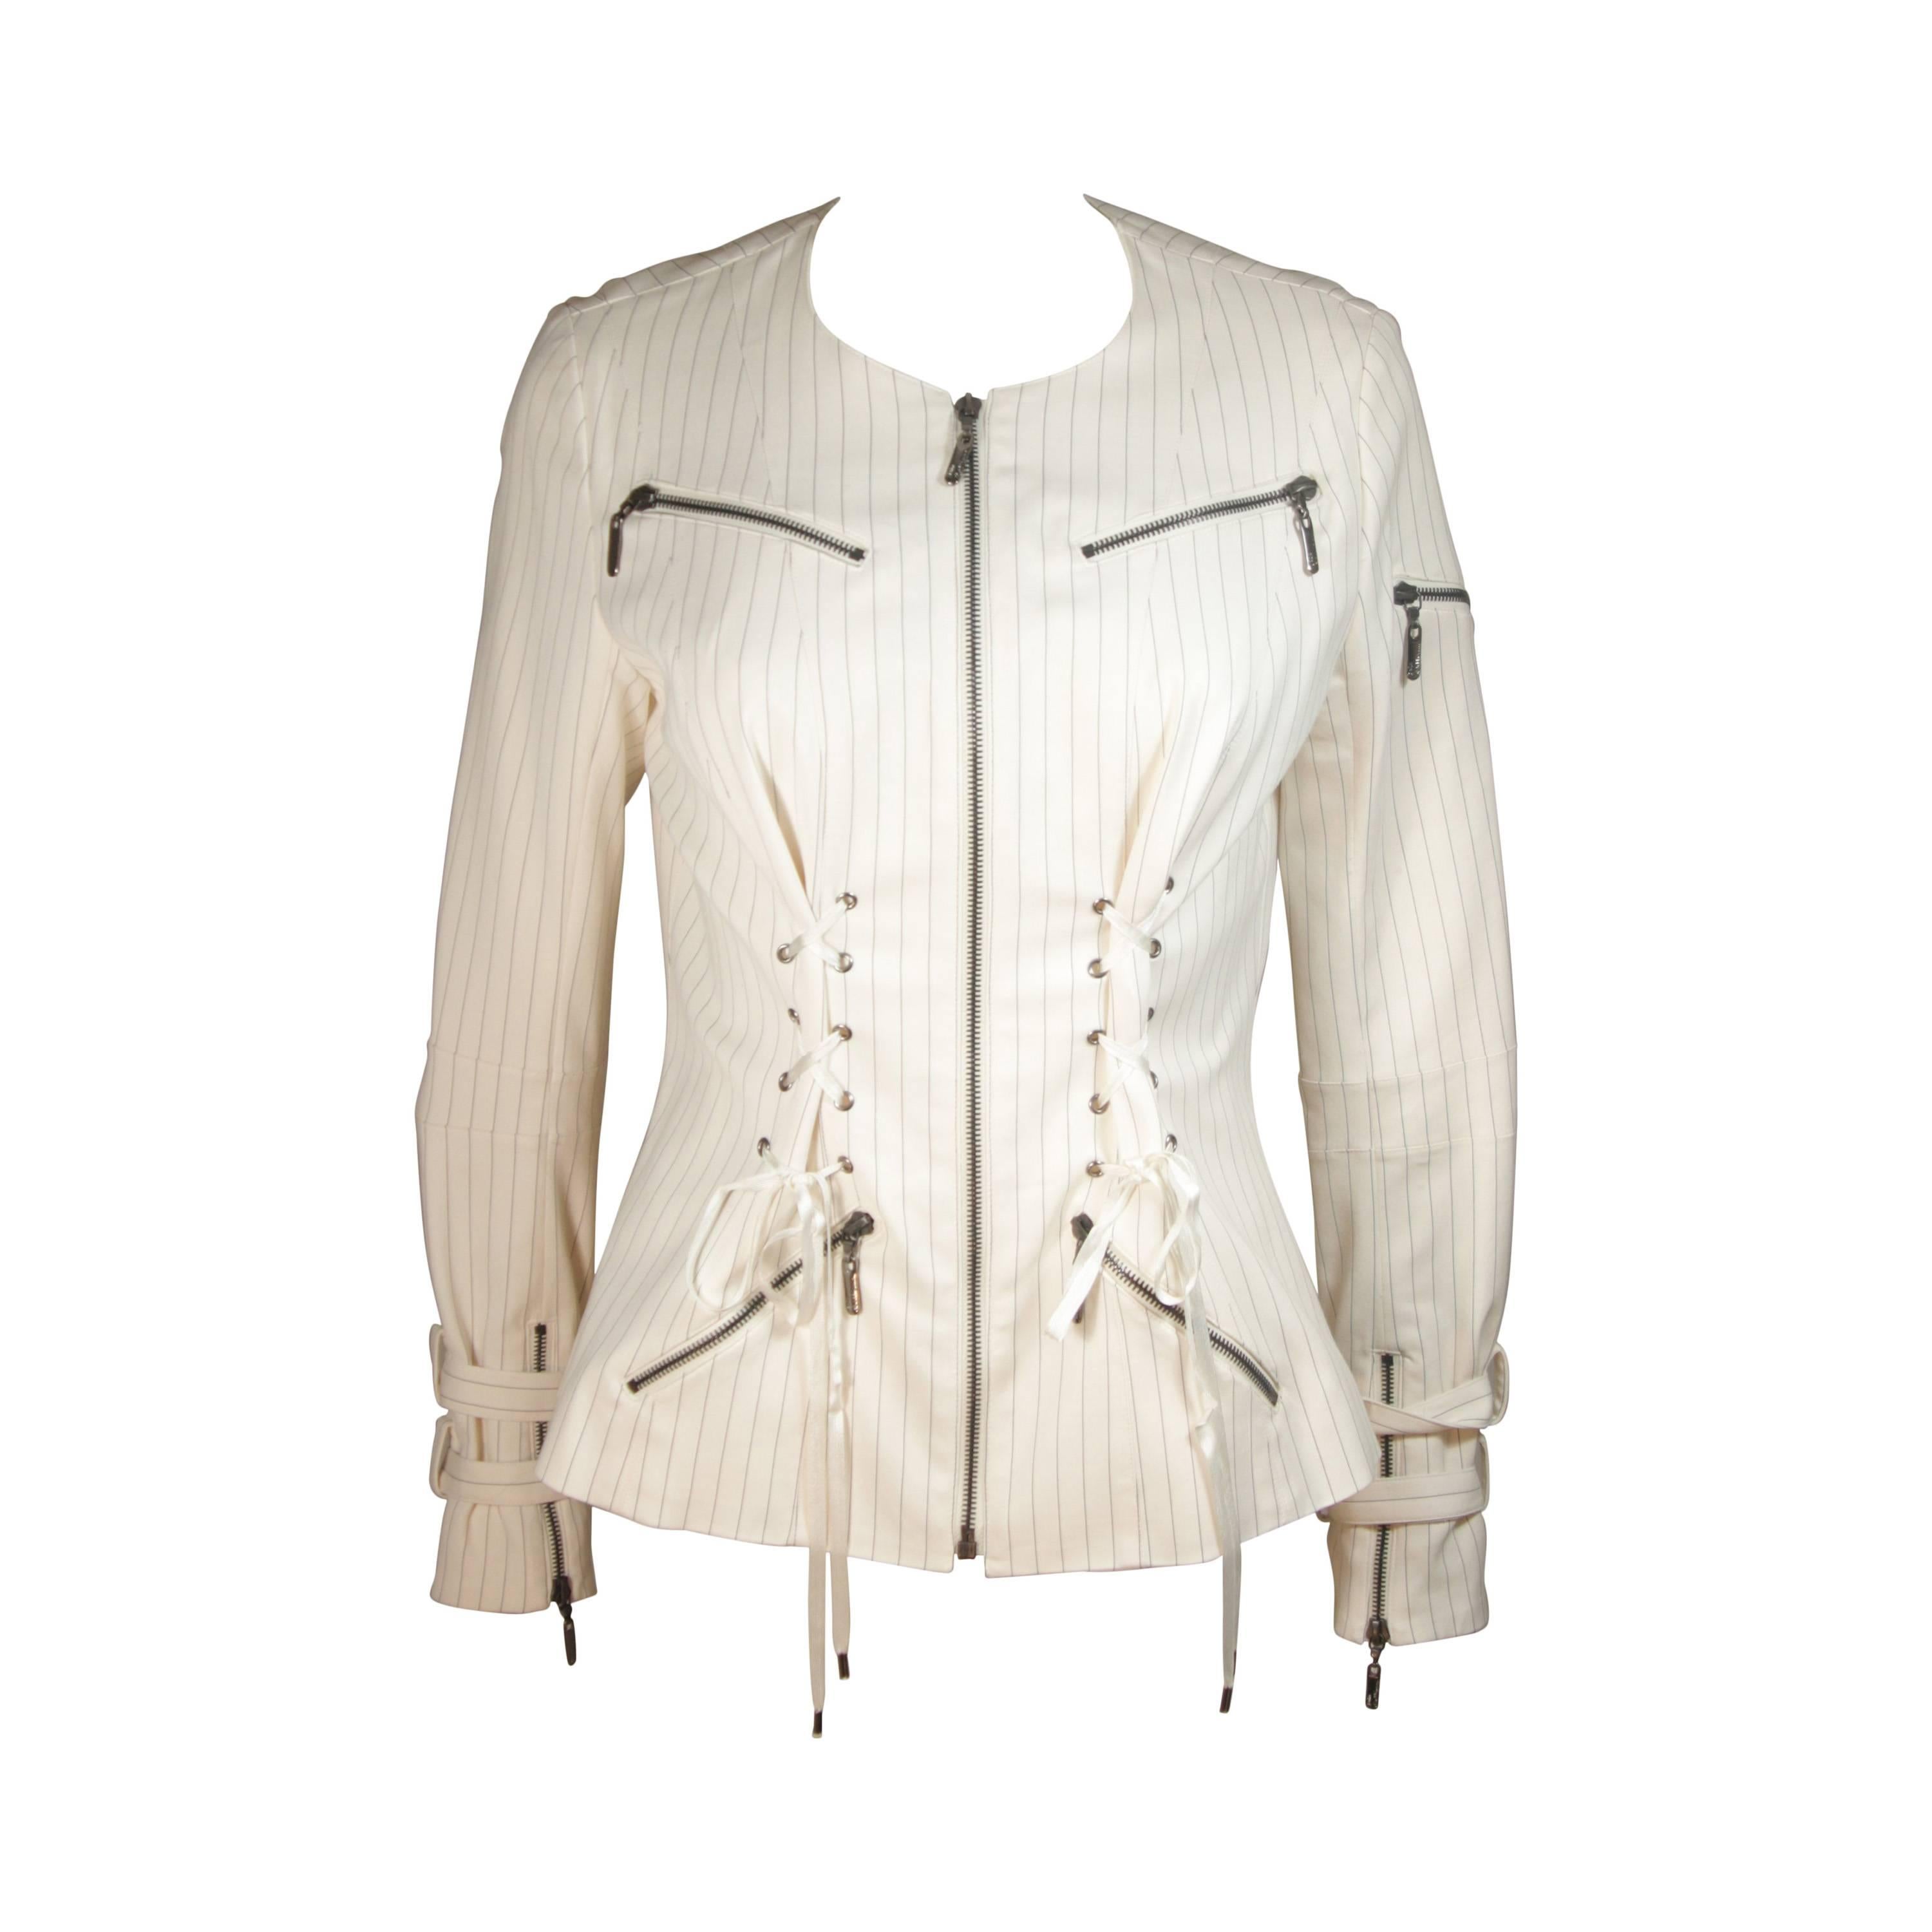 JOHN GALLIANO Off White Pinstripe Zipper Jacket with Corset Details Size 42